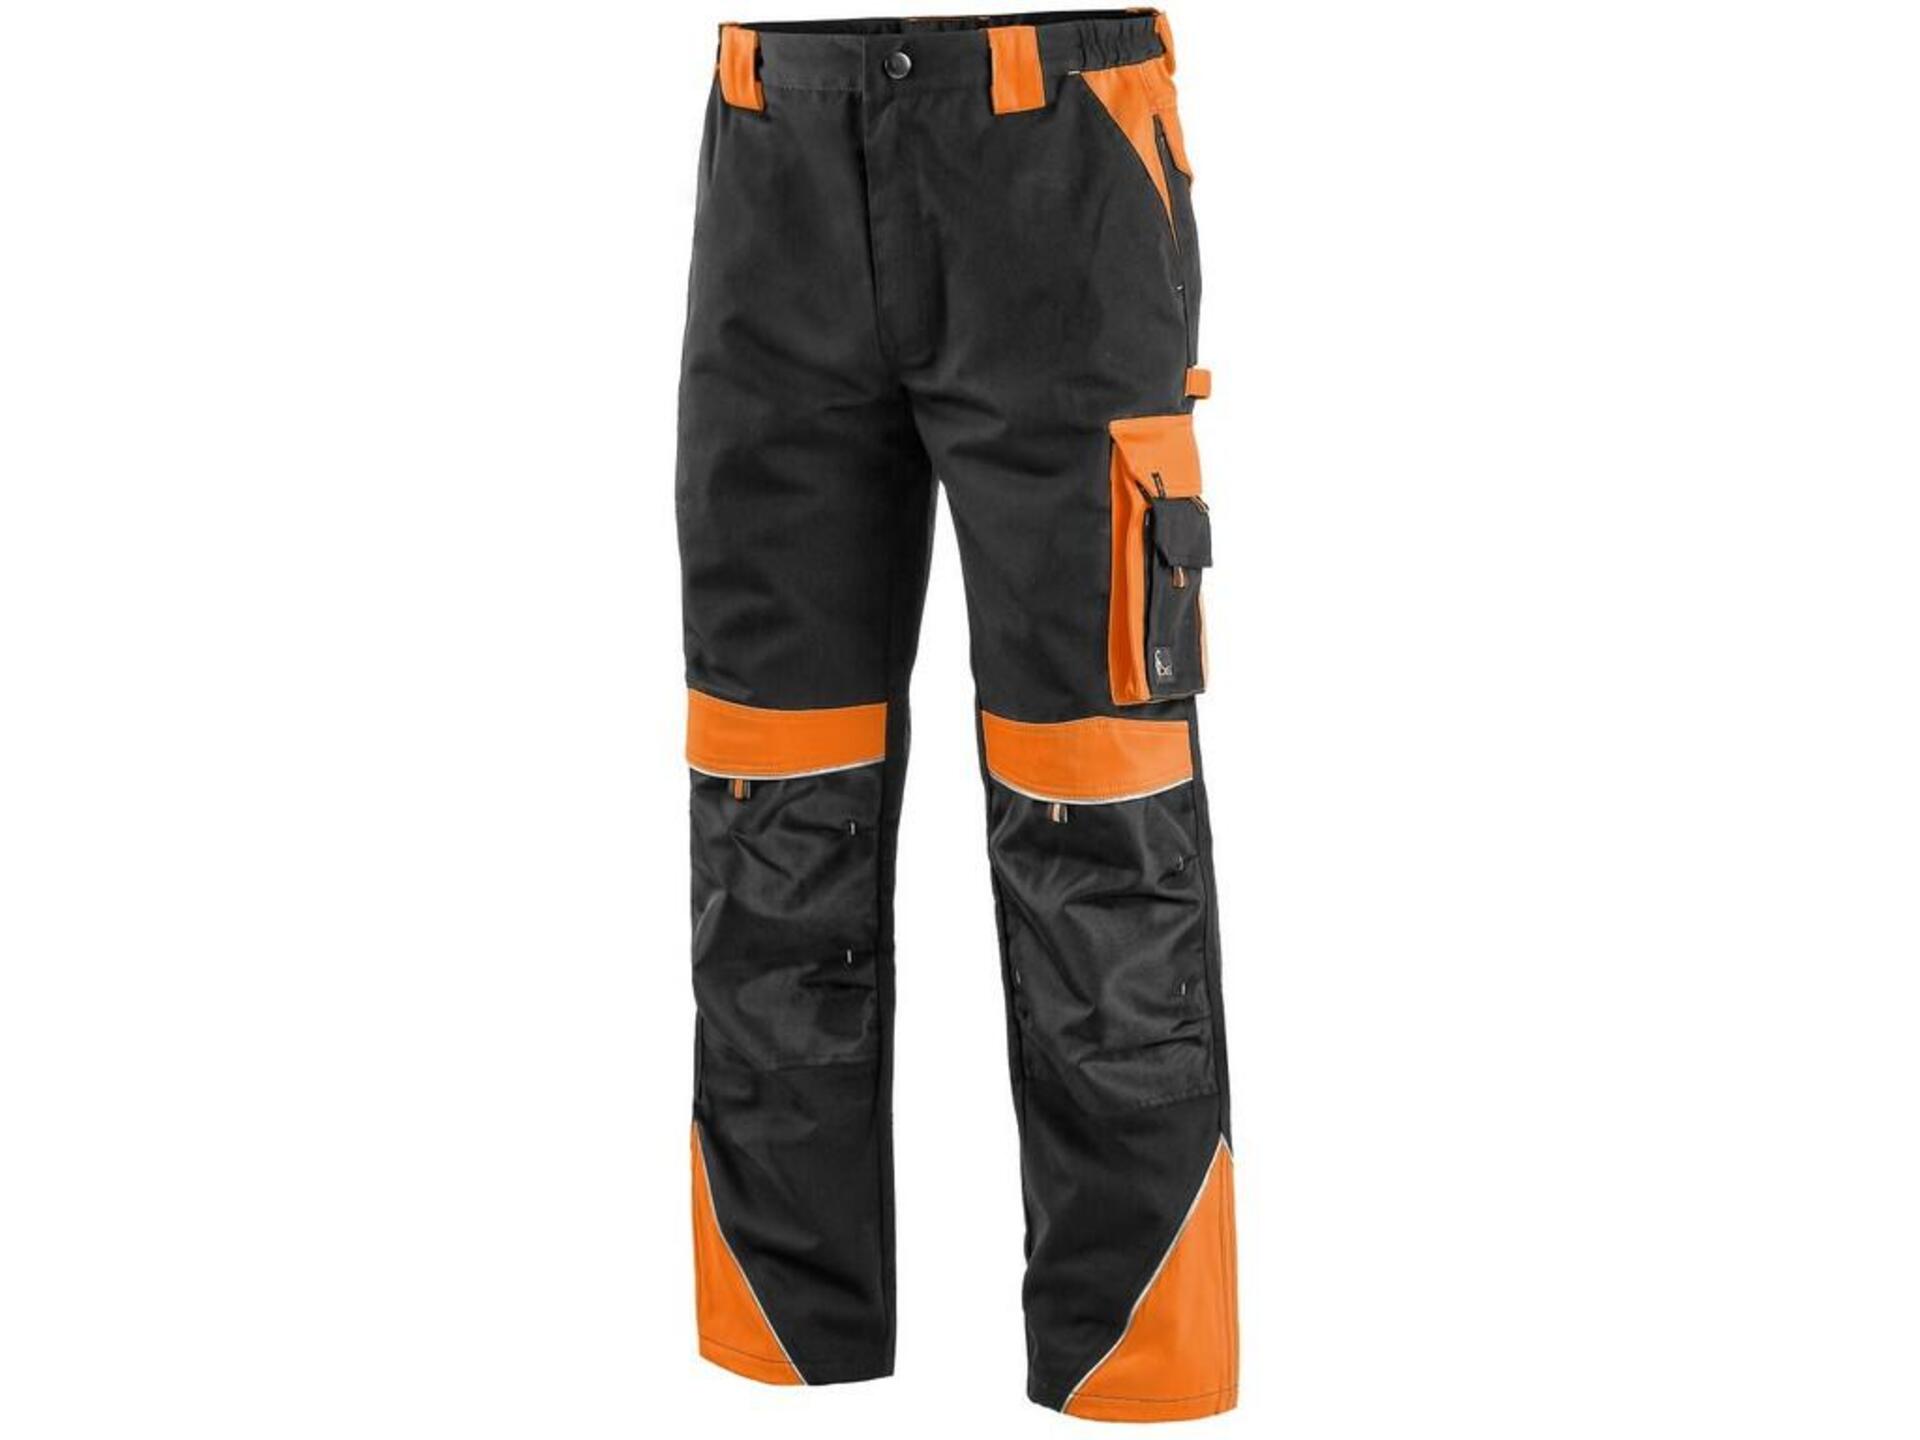 Kalhoty pracovní do pasu CXS SIRIUS BRIGHTON pánské černá/oranžová  52